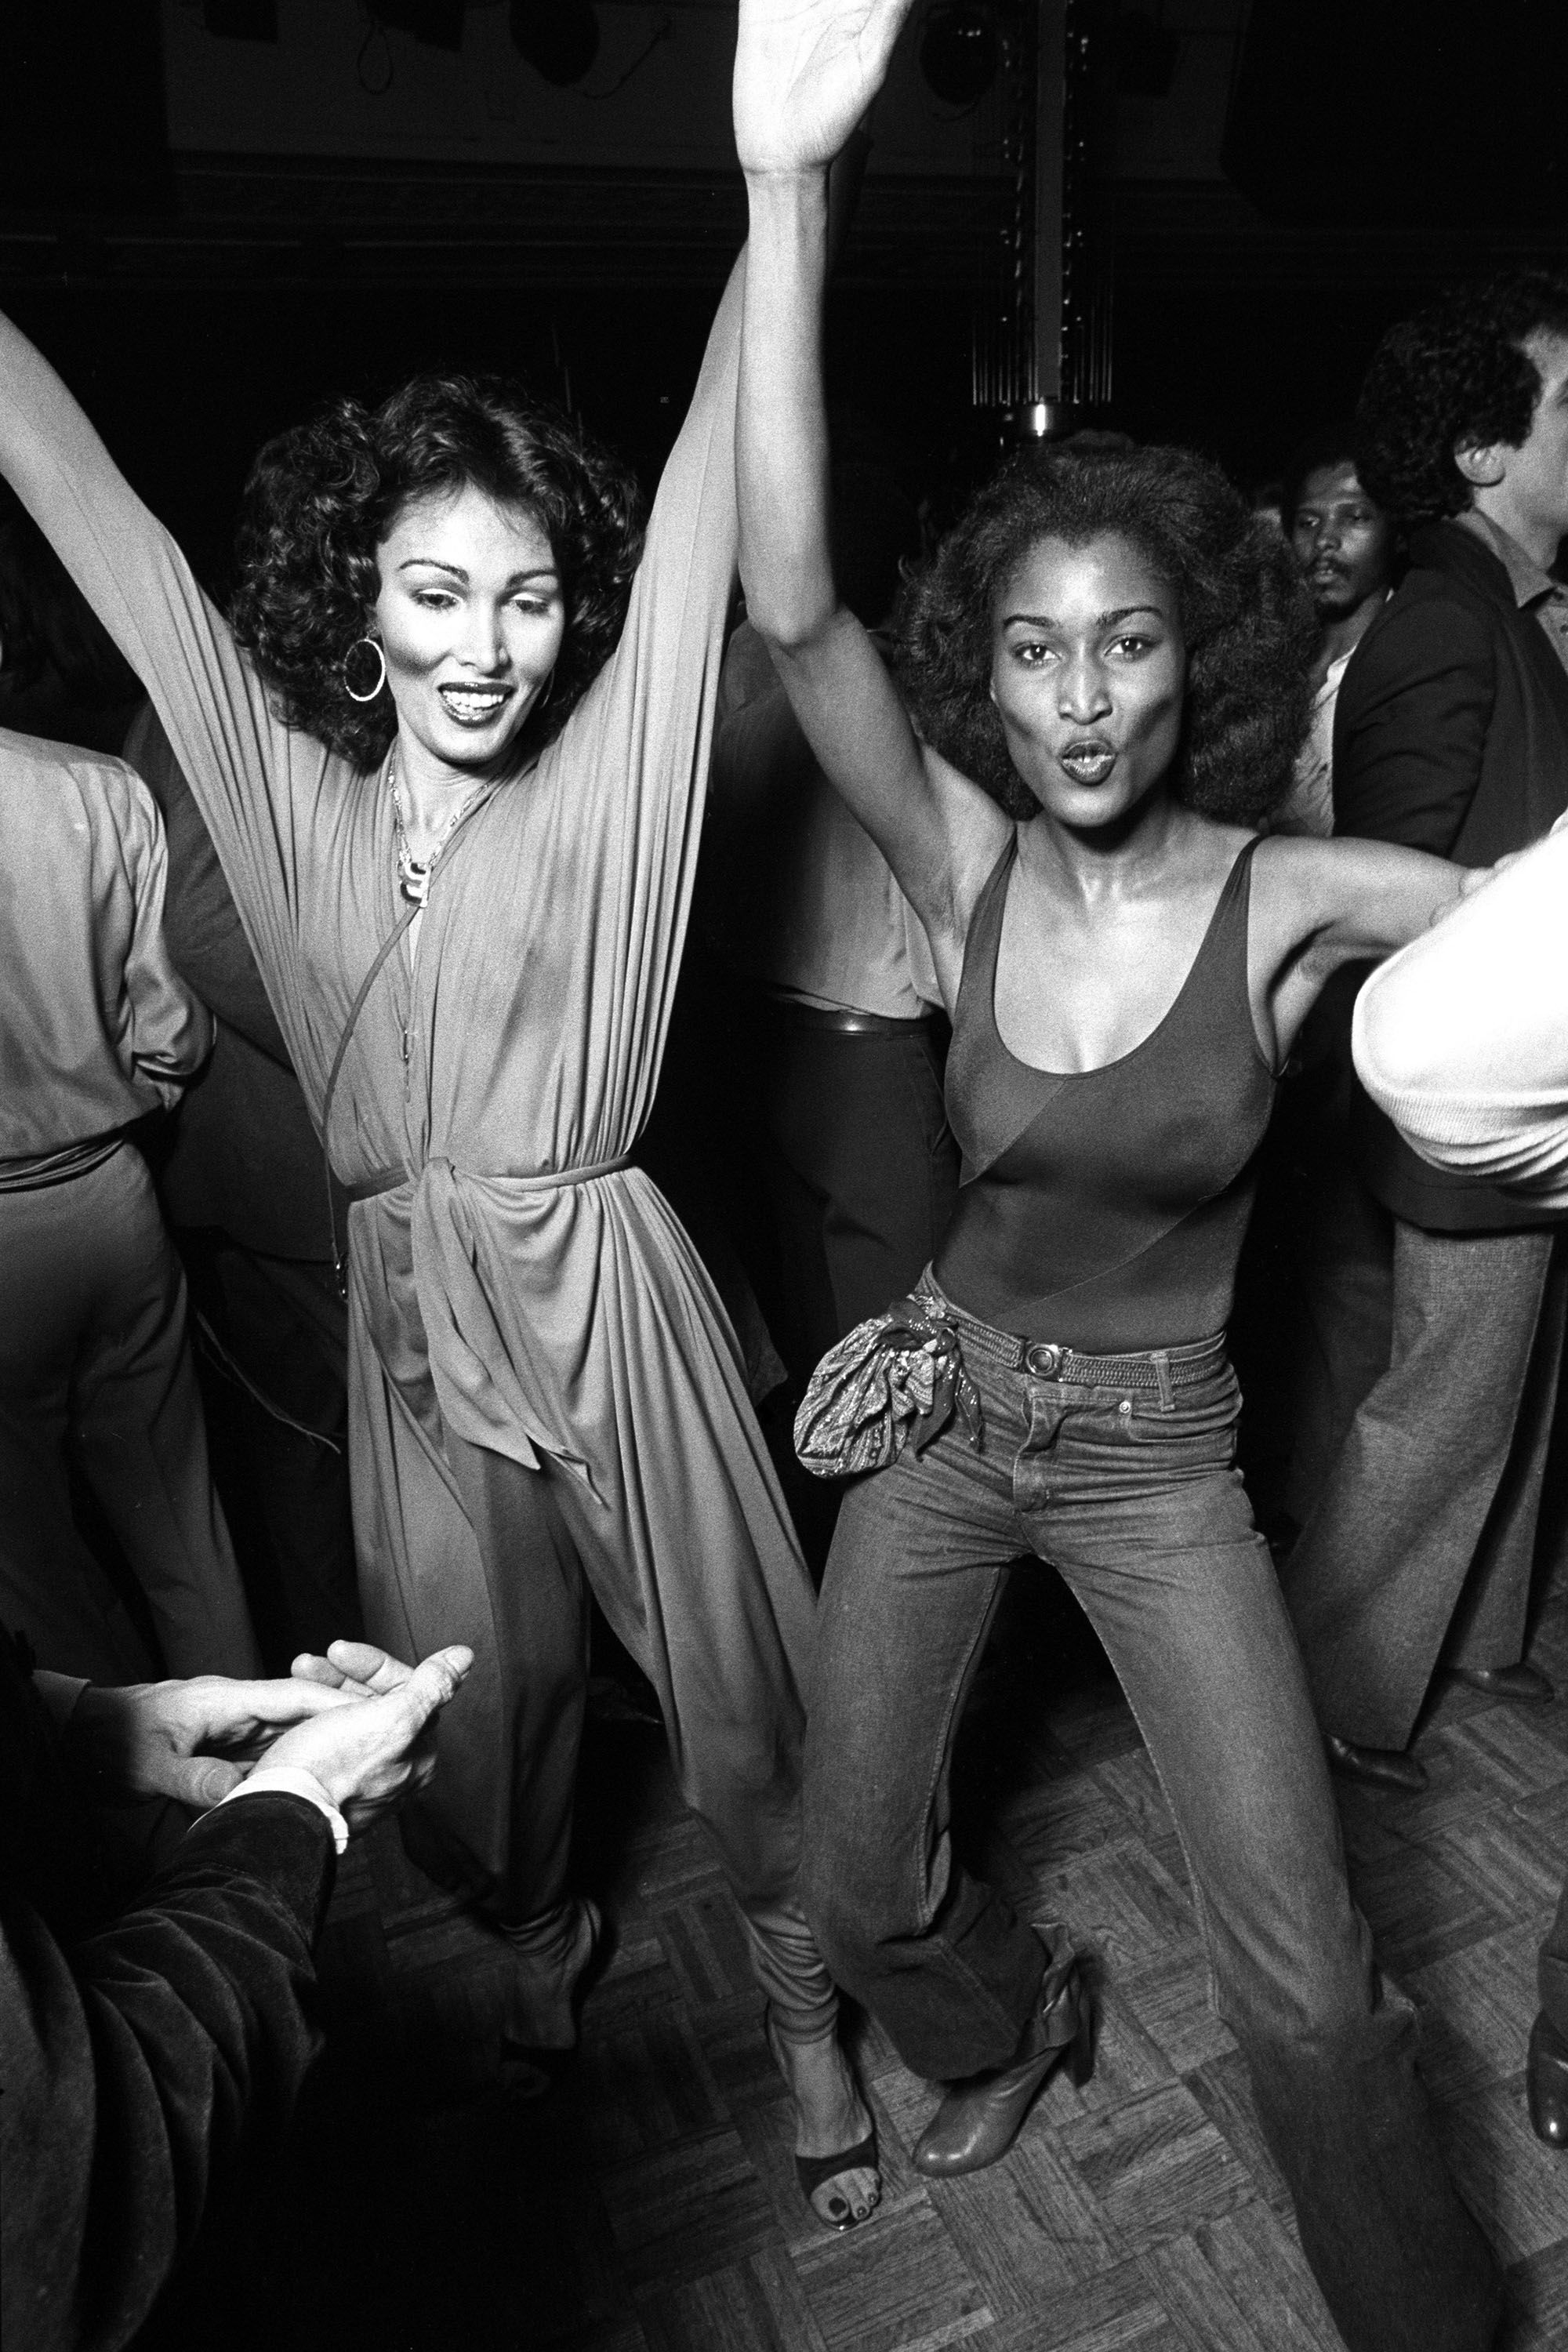 Vintage Photo of Disco Fever and Studio 54 Scene Anniversary of The Hustle